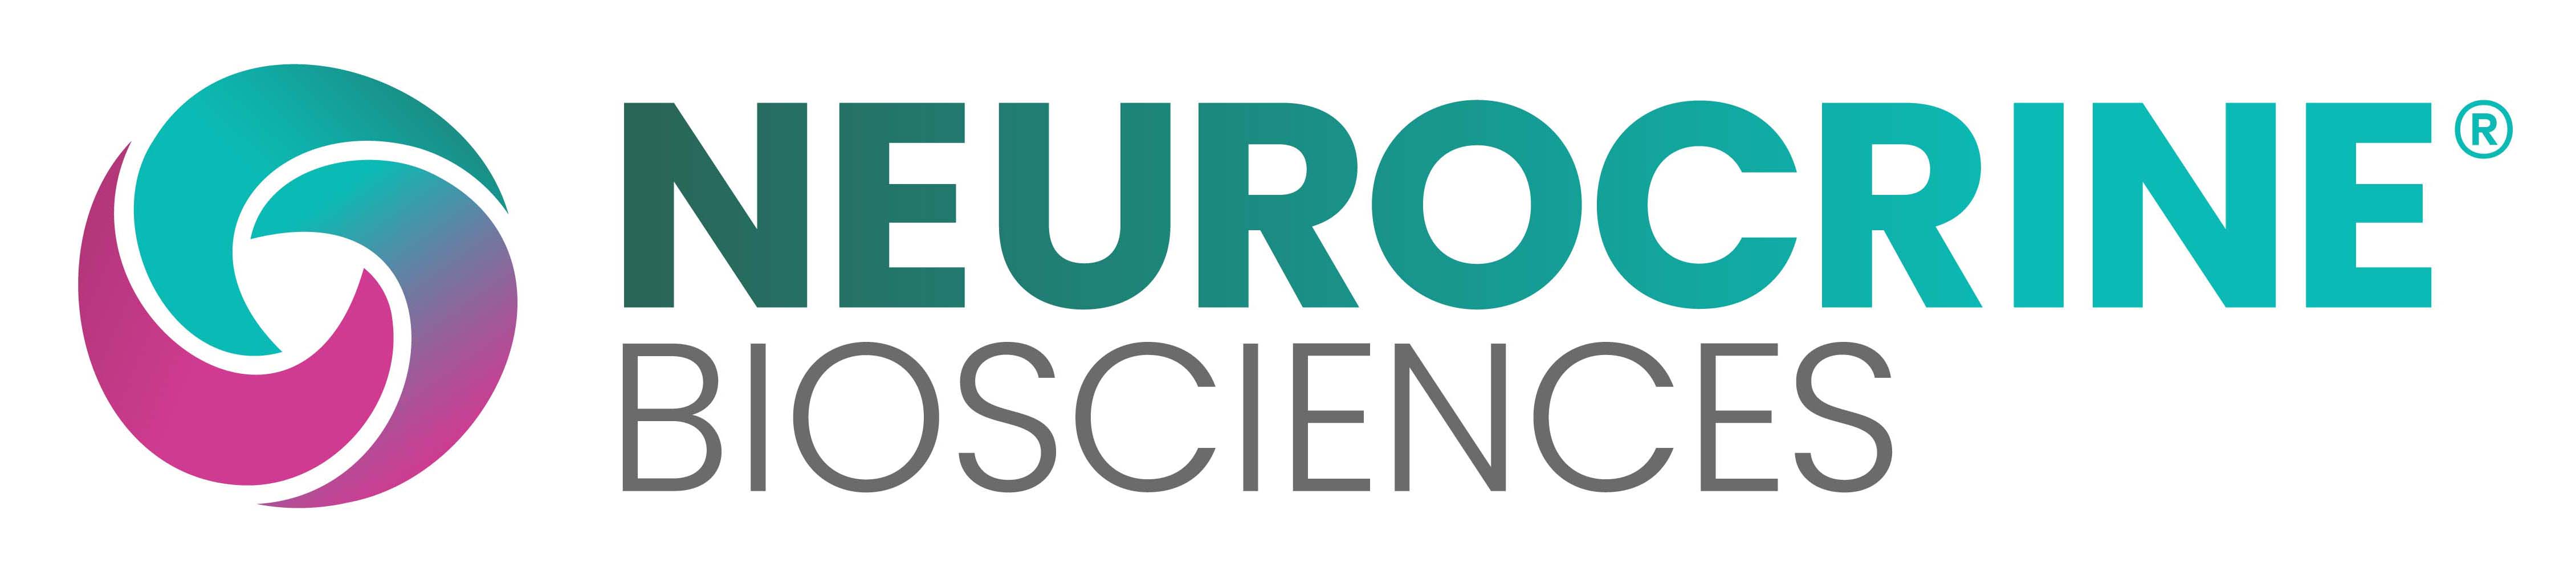 Neurocrine Biosciences Logo